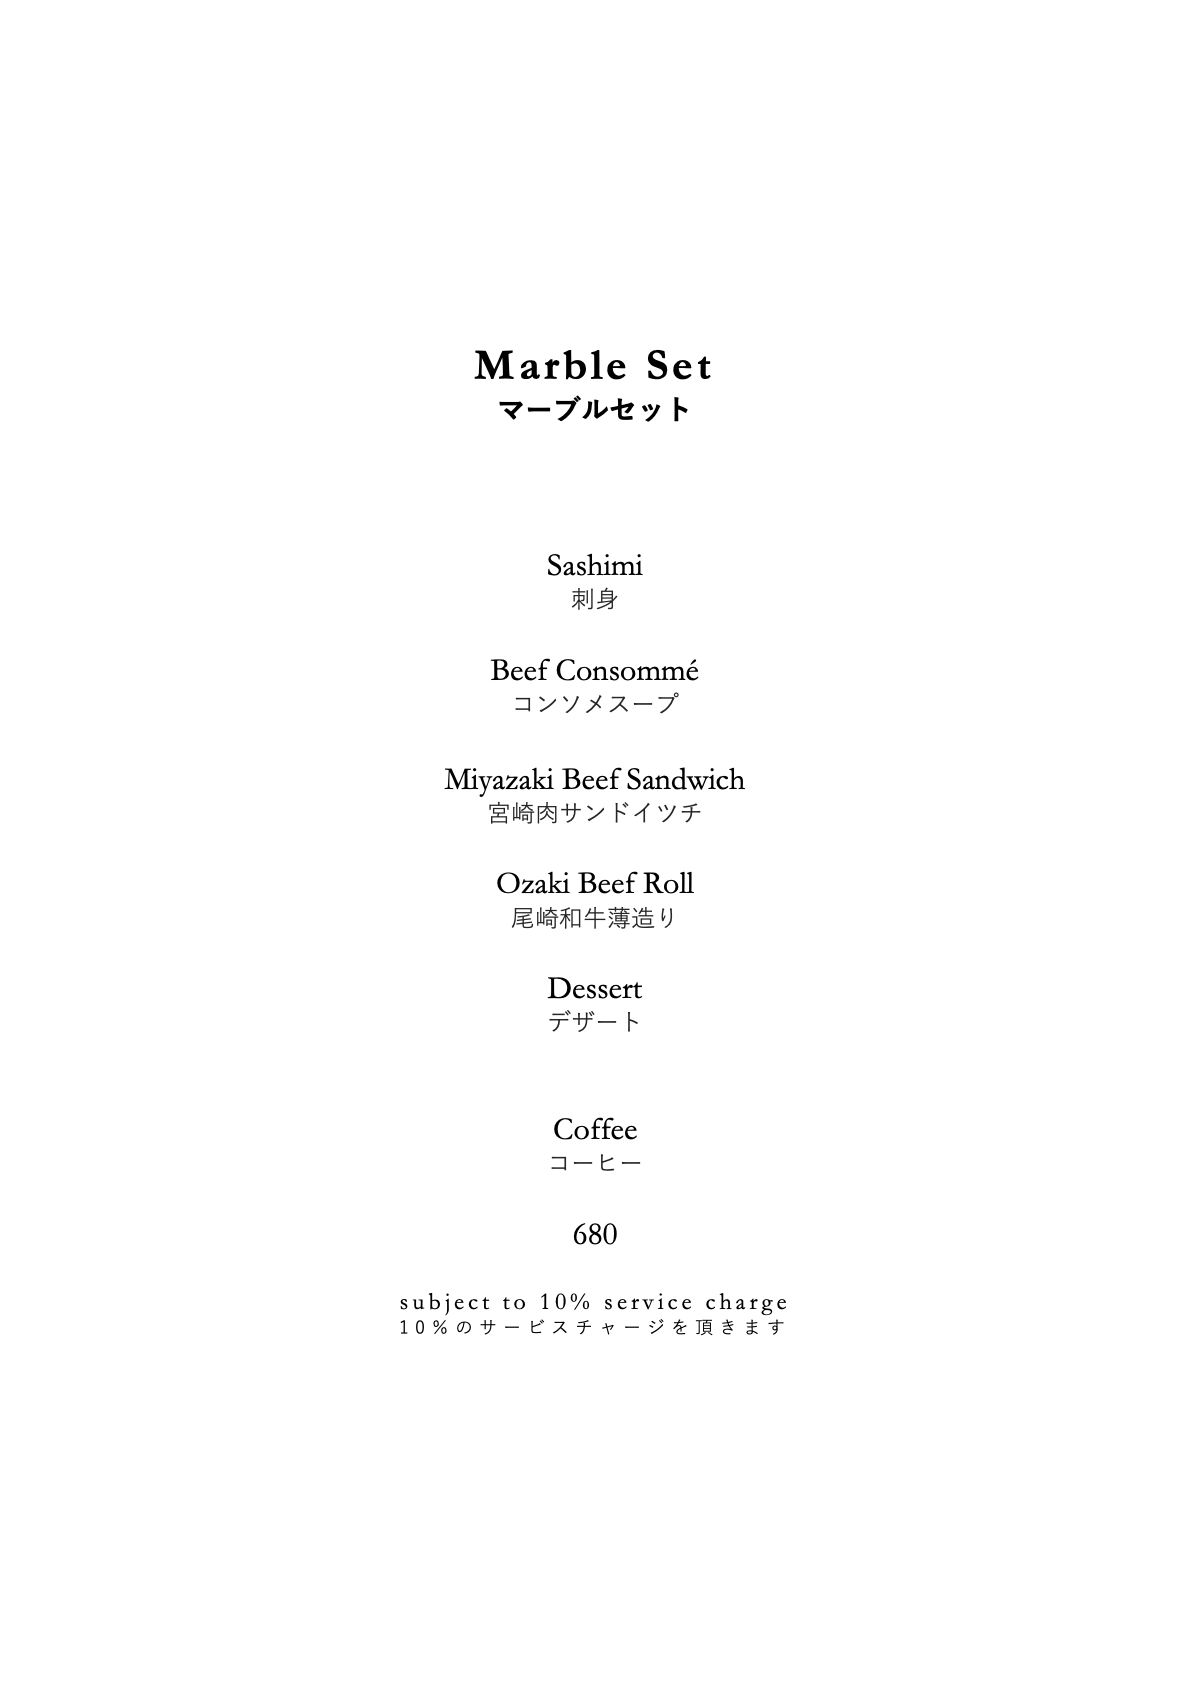 marble set 680 (9 April 2021).png